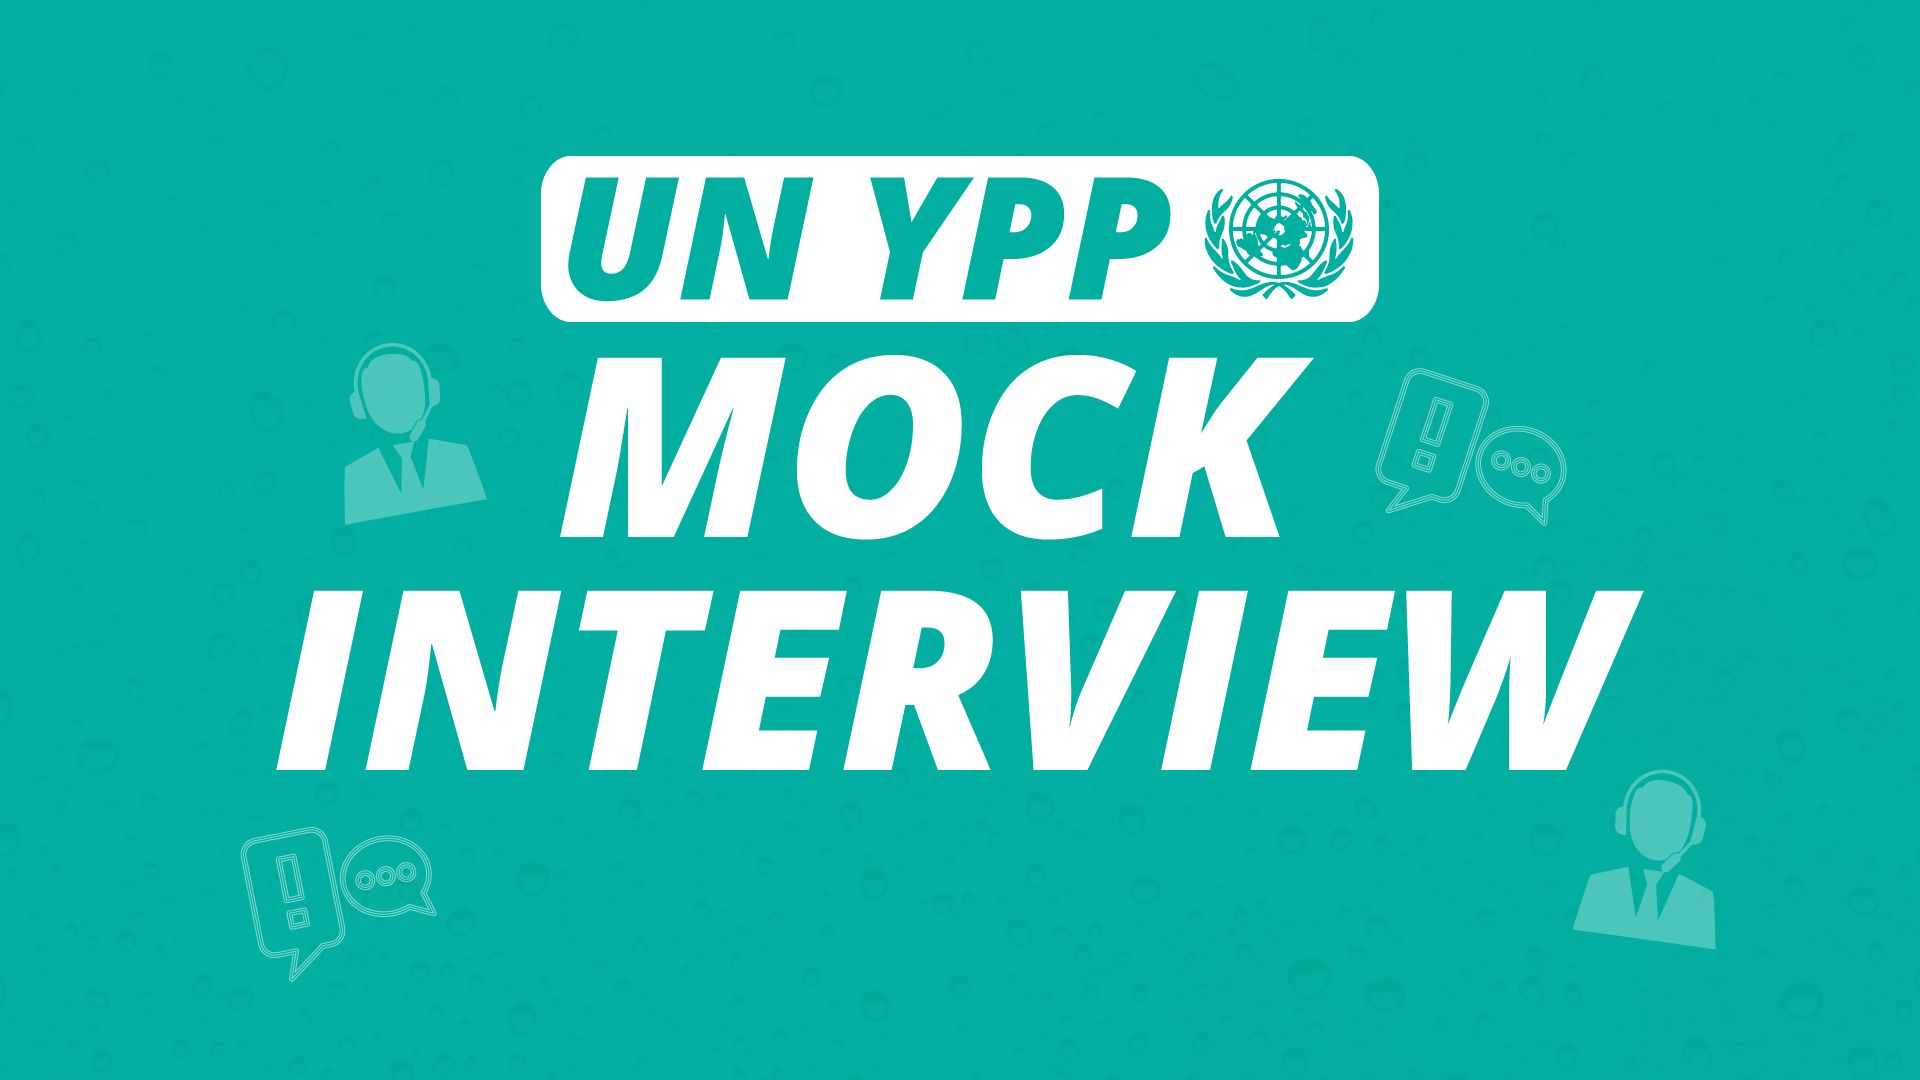 UNYPP-Mock-Interview-2